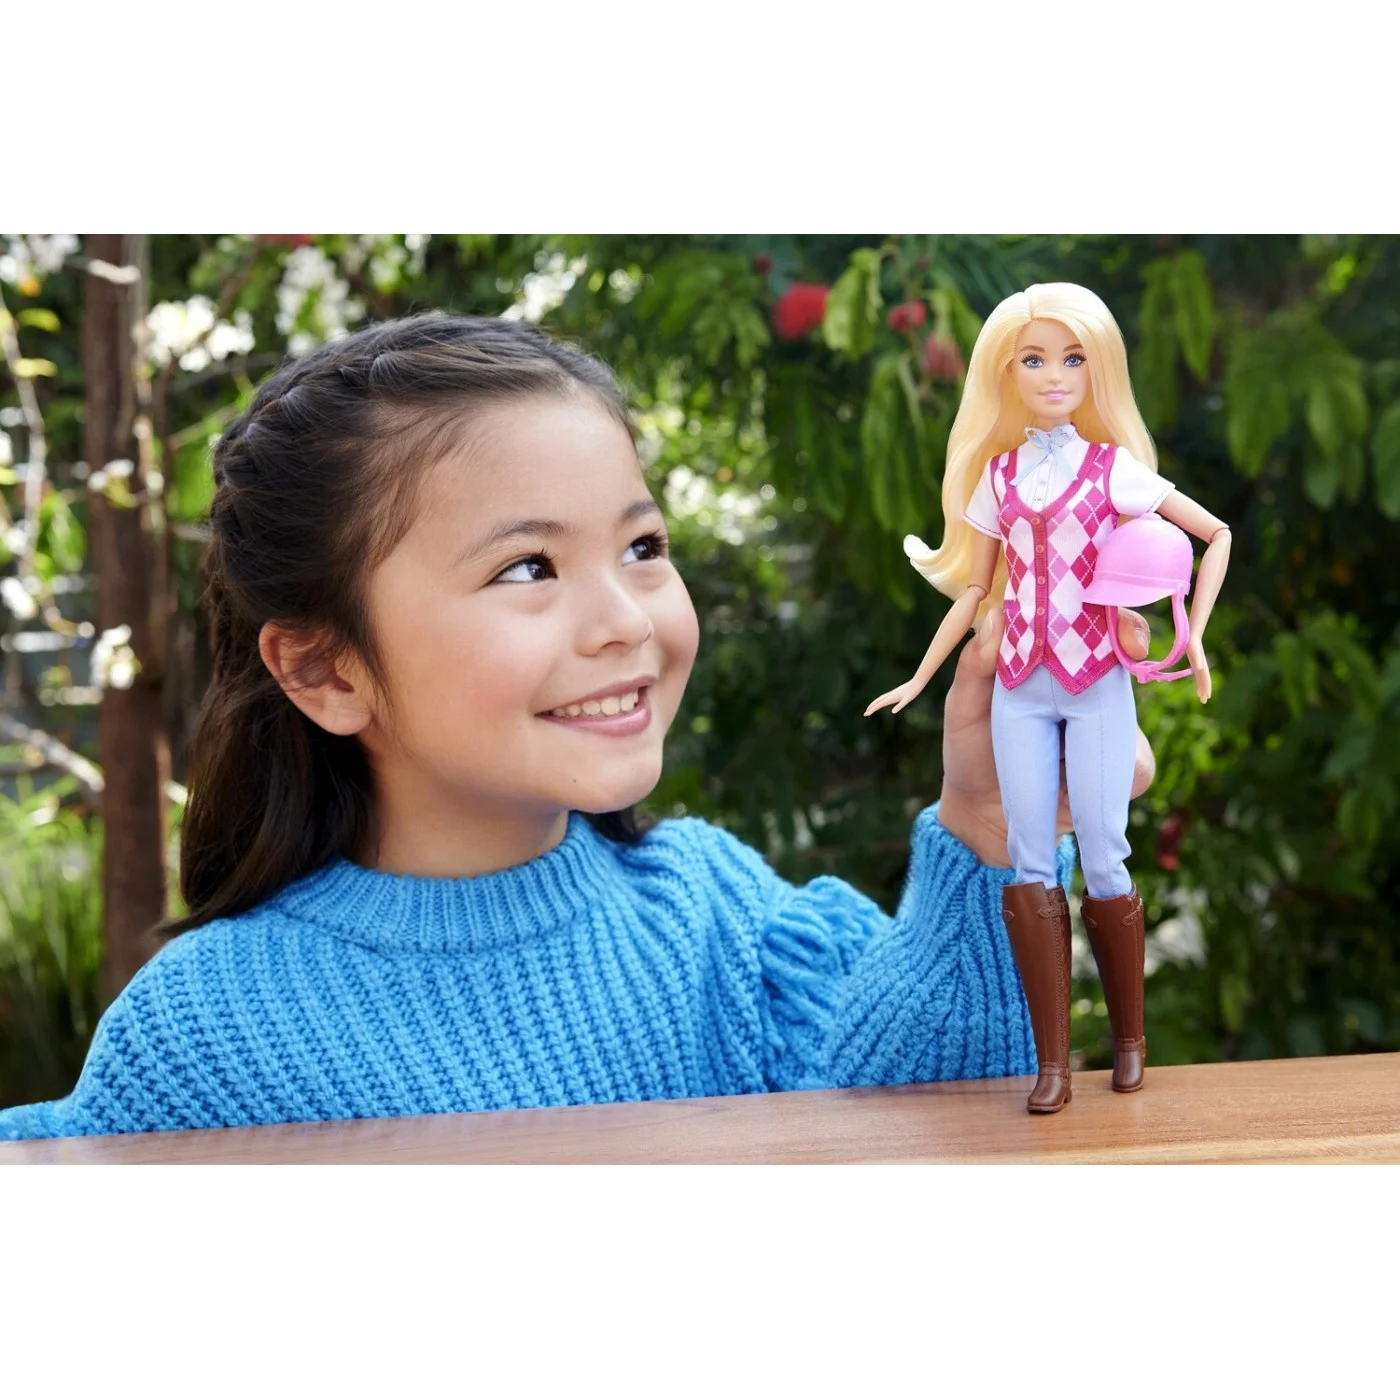 Mattel Barbie - Mysteries The Horse Chase Doll Ιππασία HXJ38 (HXP06)